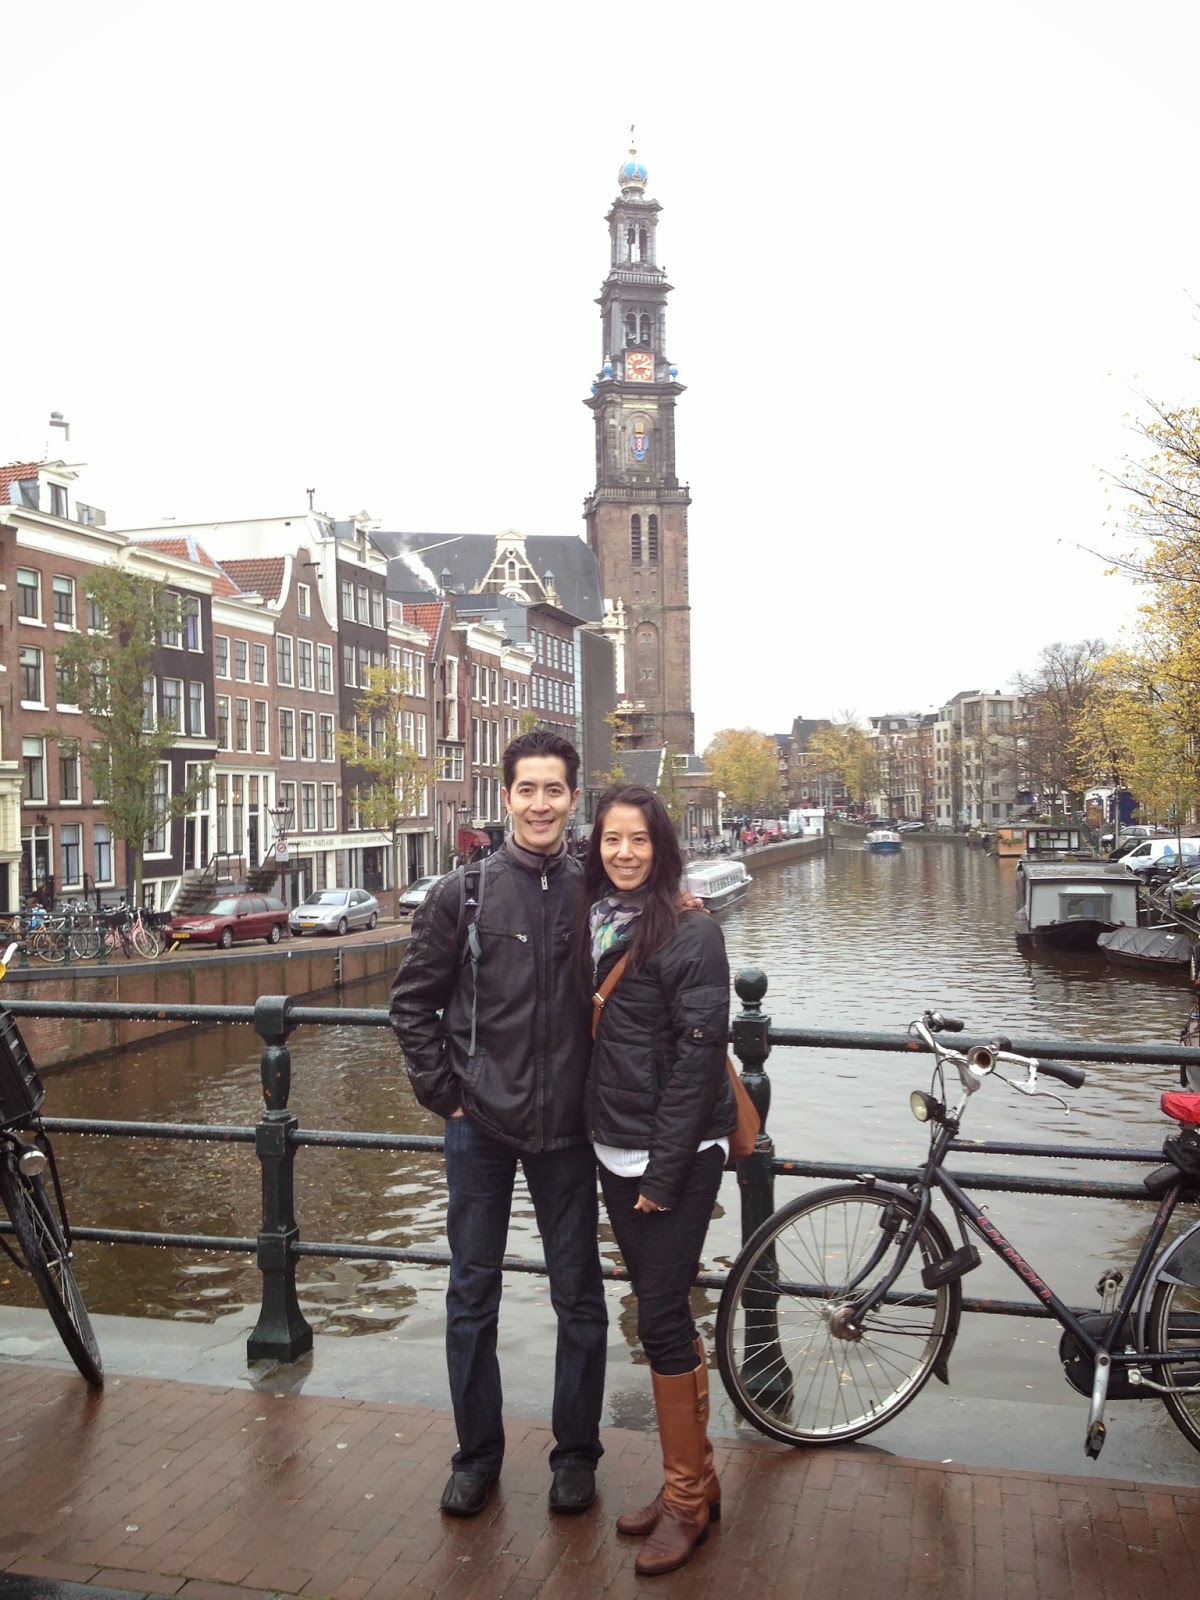 Amsterdam - Canal near the Anne Frank House